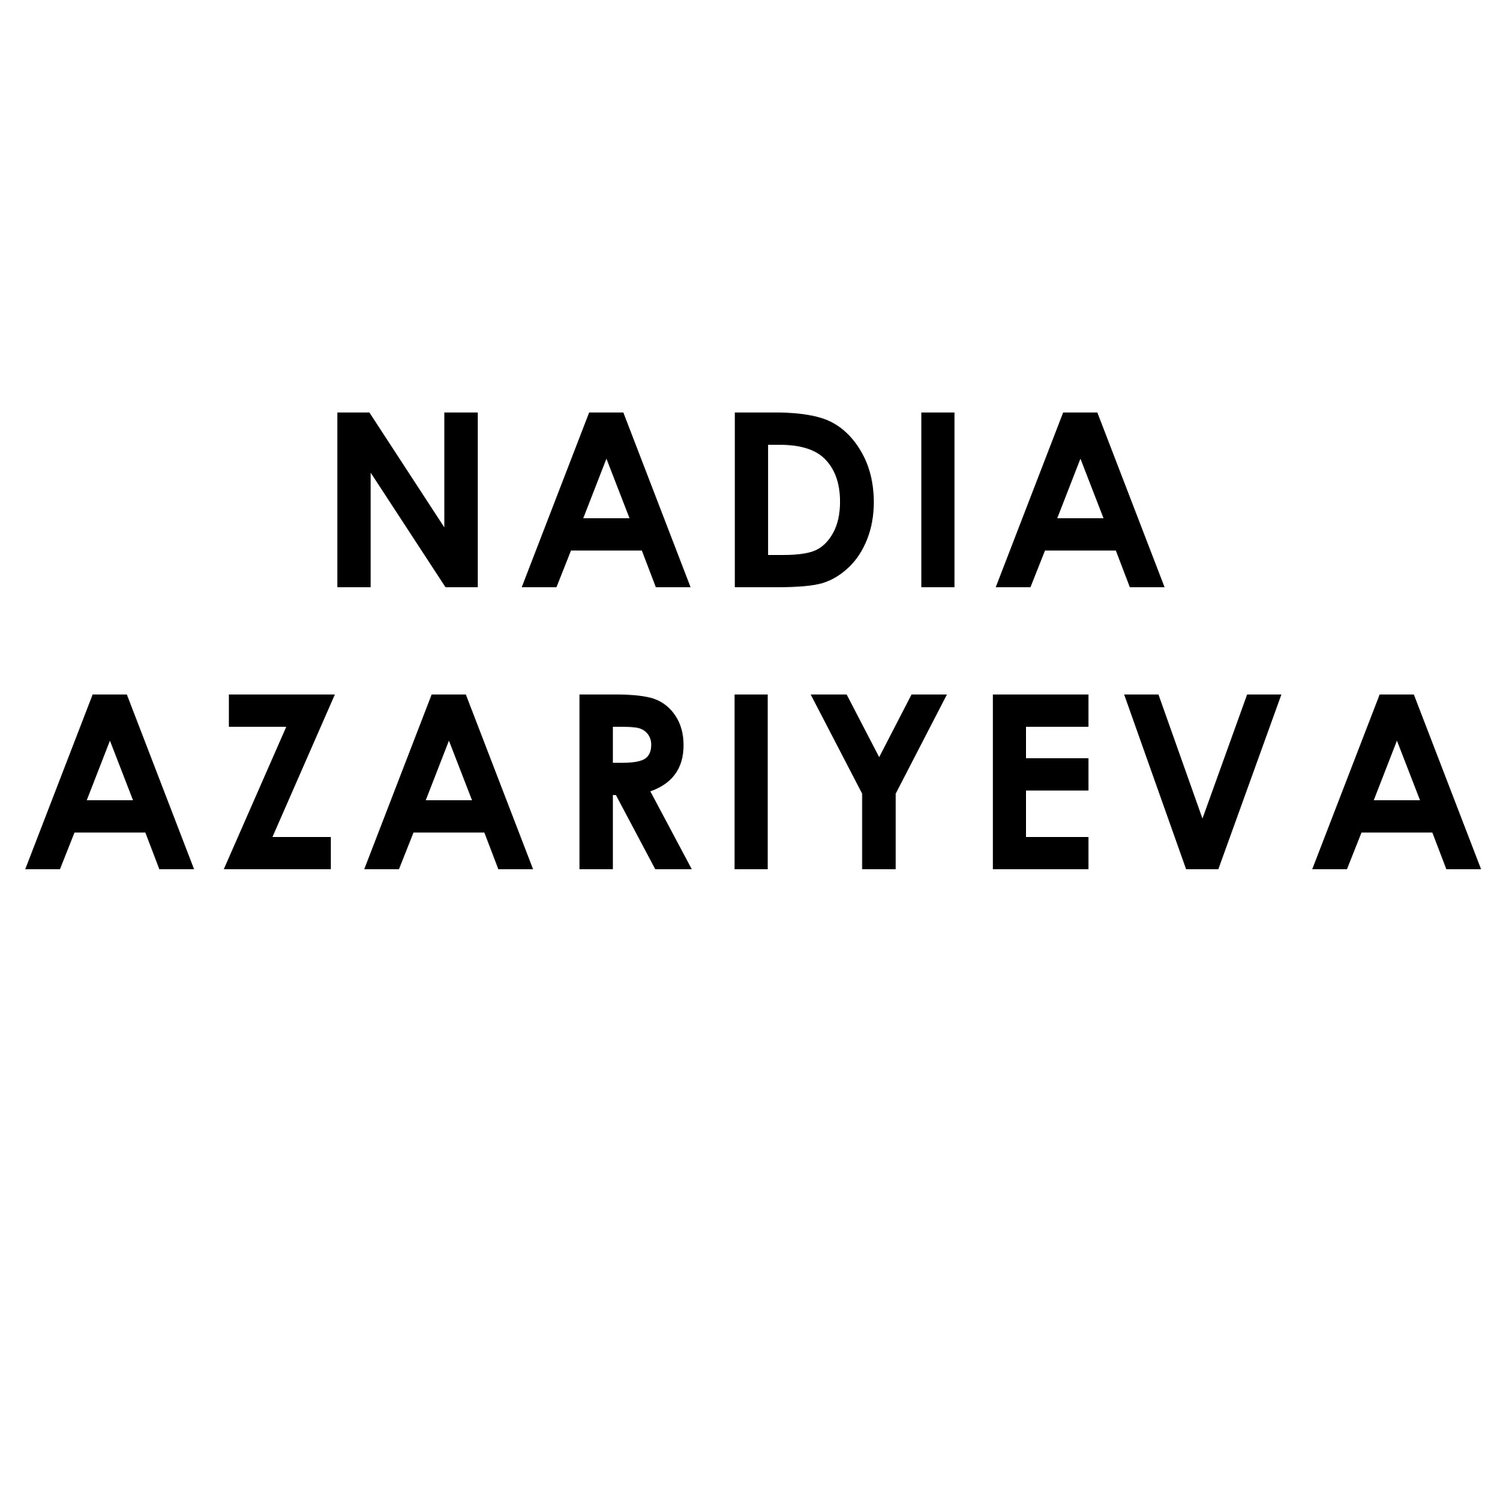 Nadia Azariyeva: Pattern Design and Art Prints